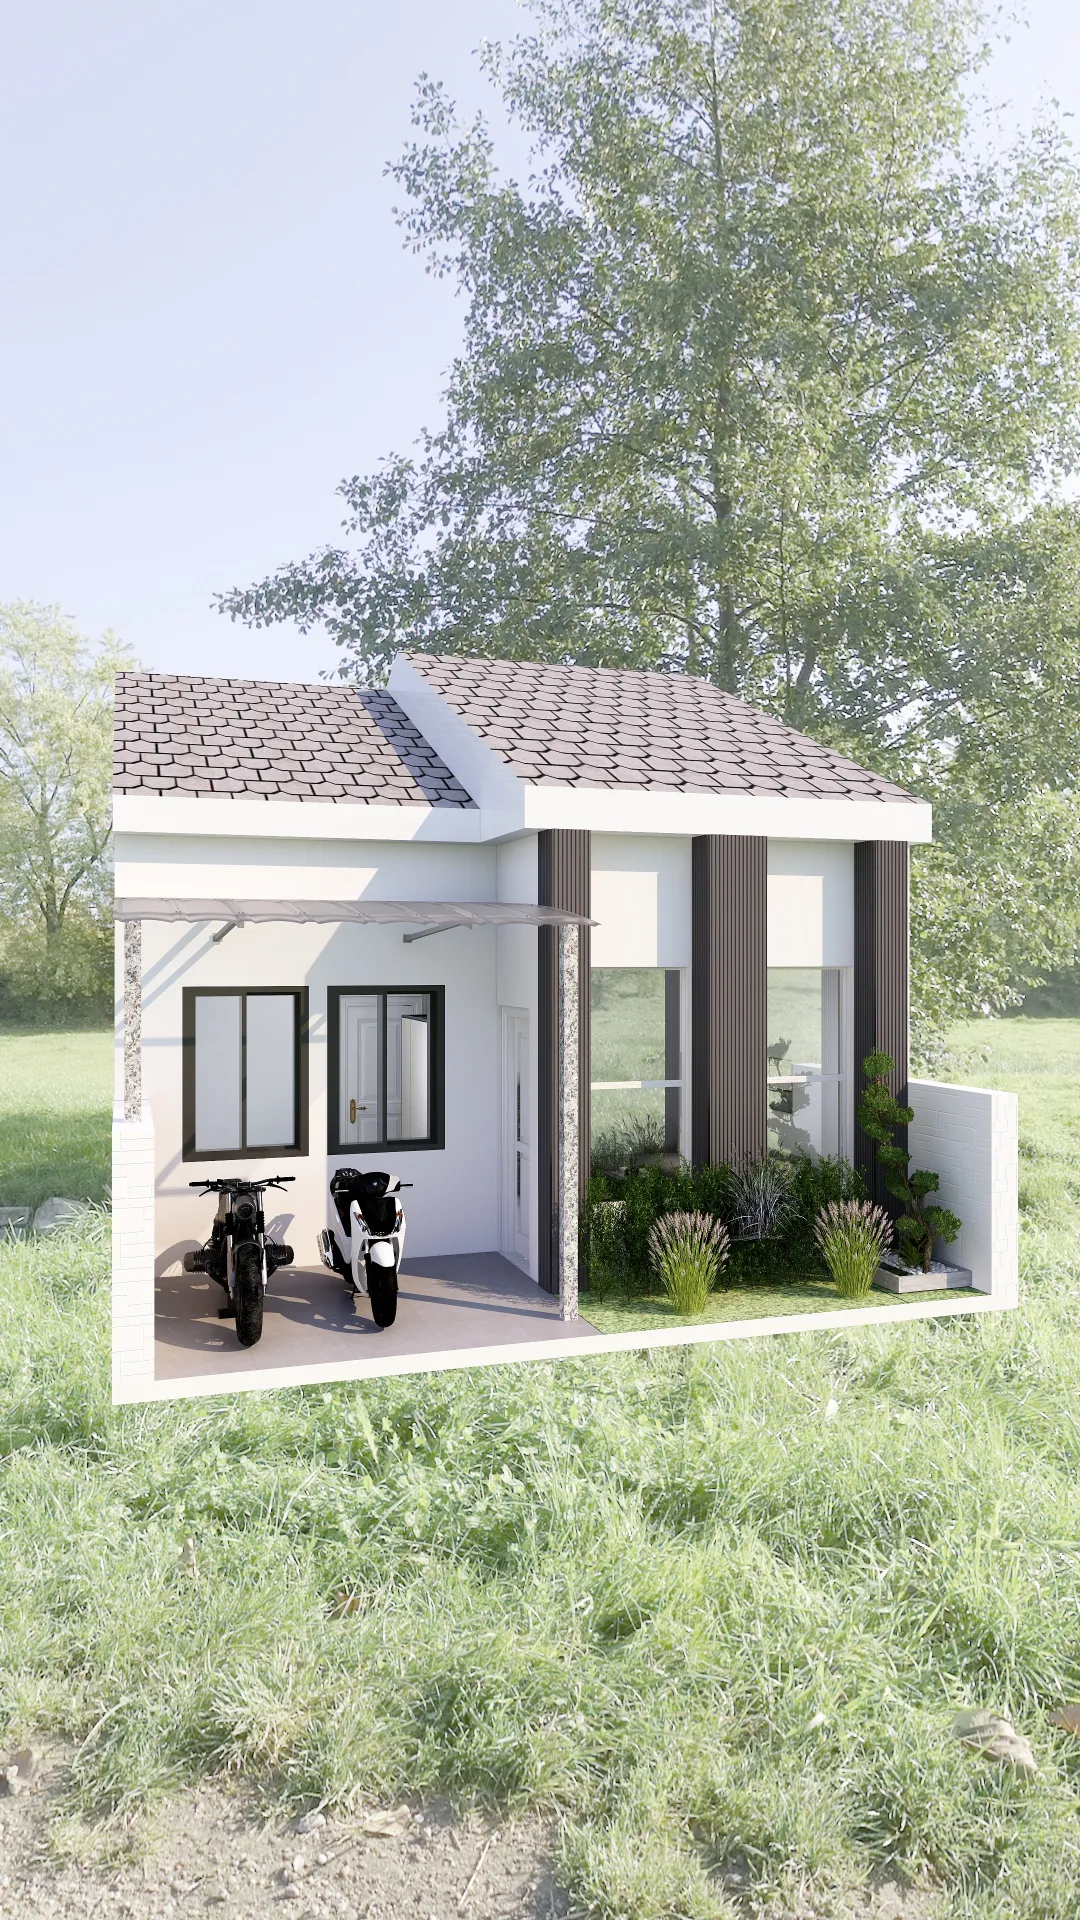 propertylexis的装修设计方案:Home Gita
